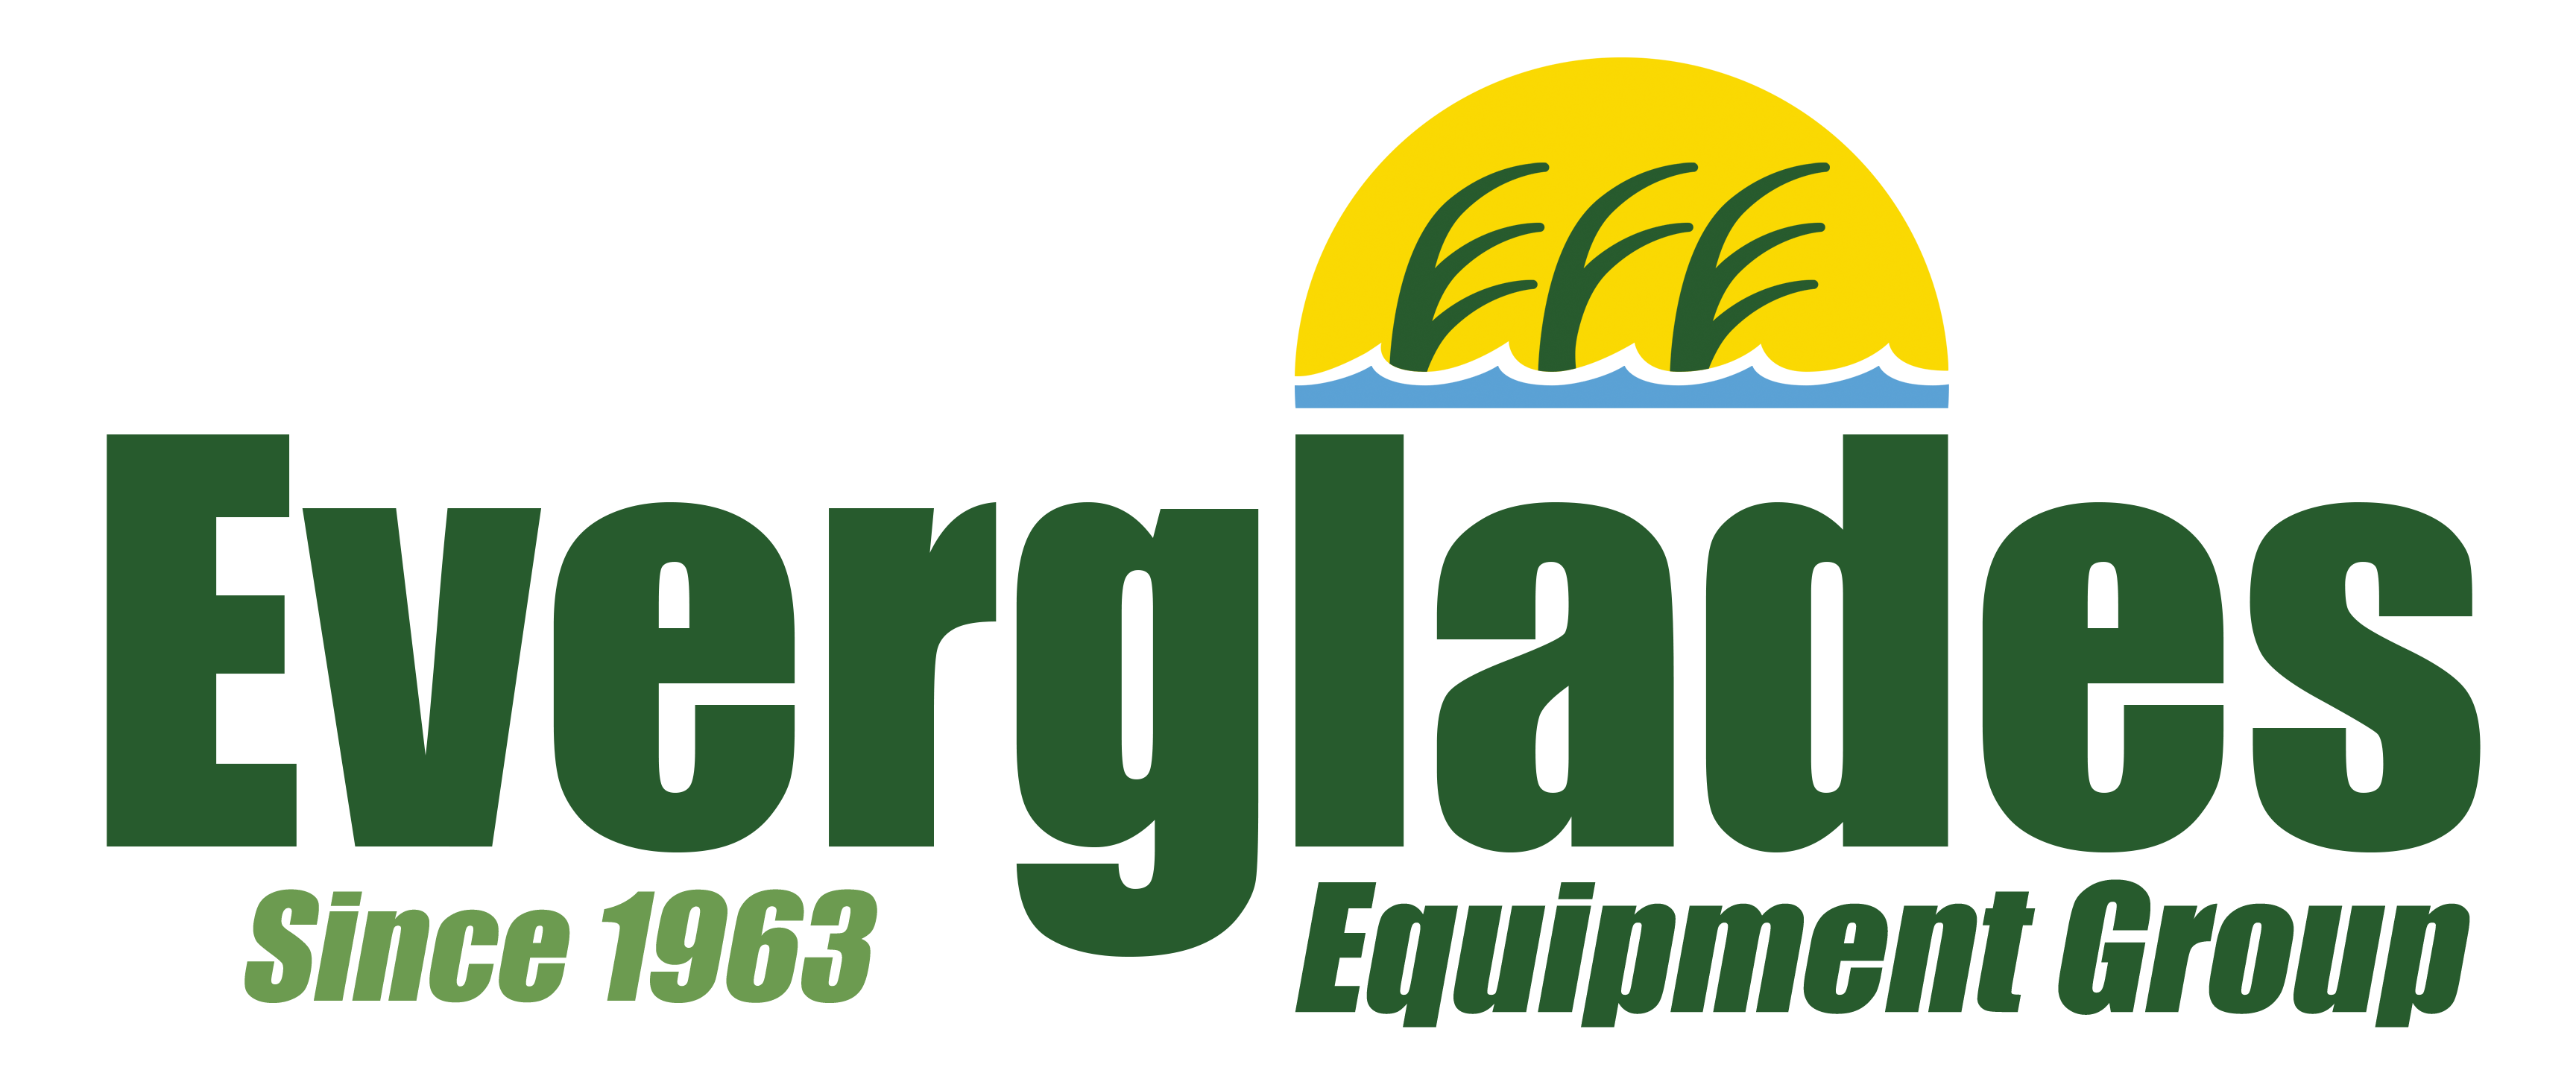 Everglades Logo - Everglades Logo Final Industry Magazine